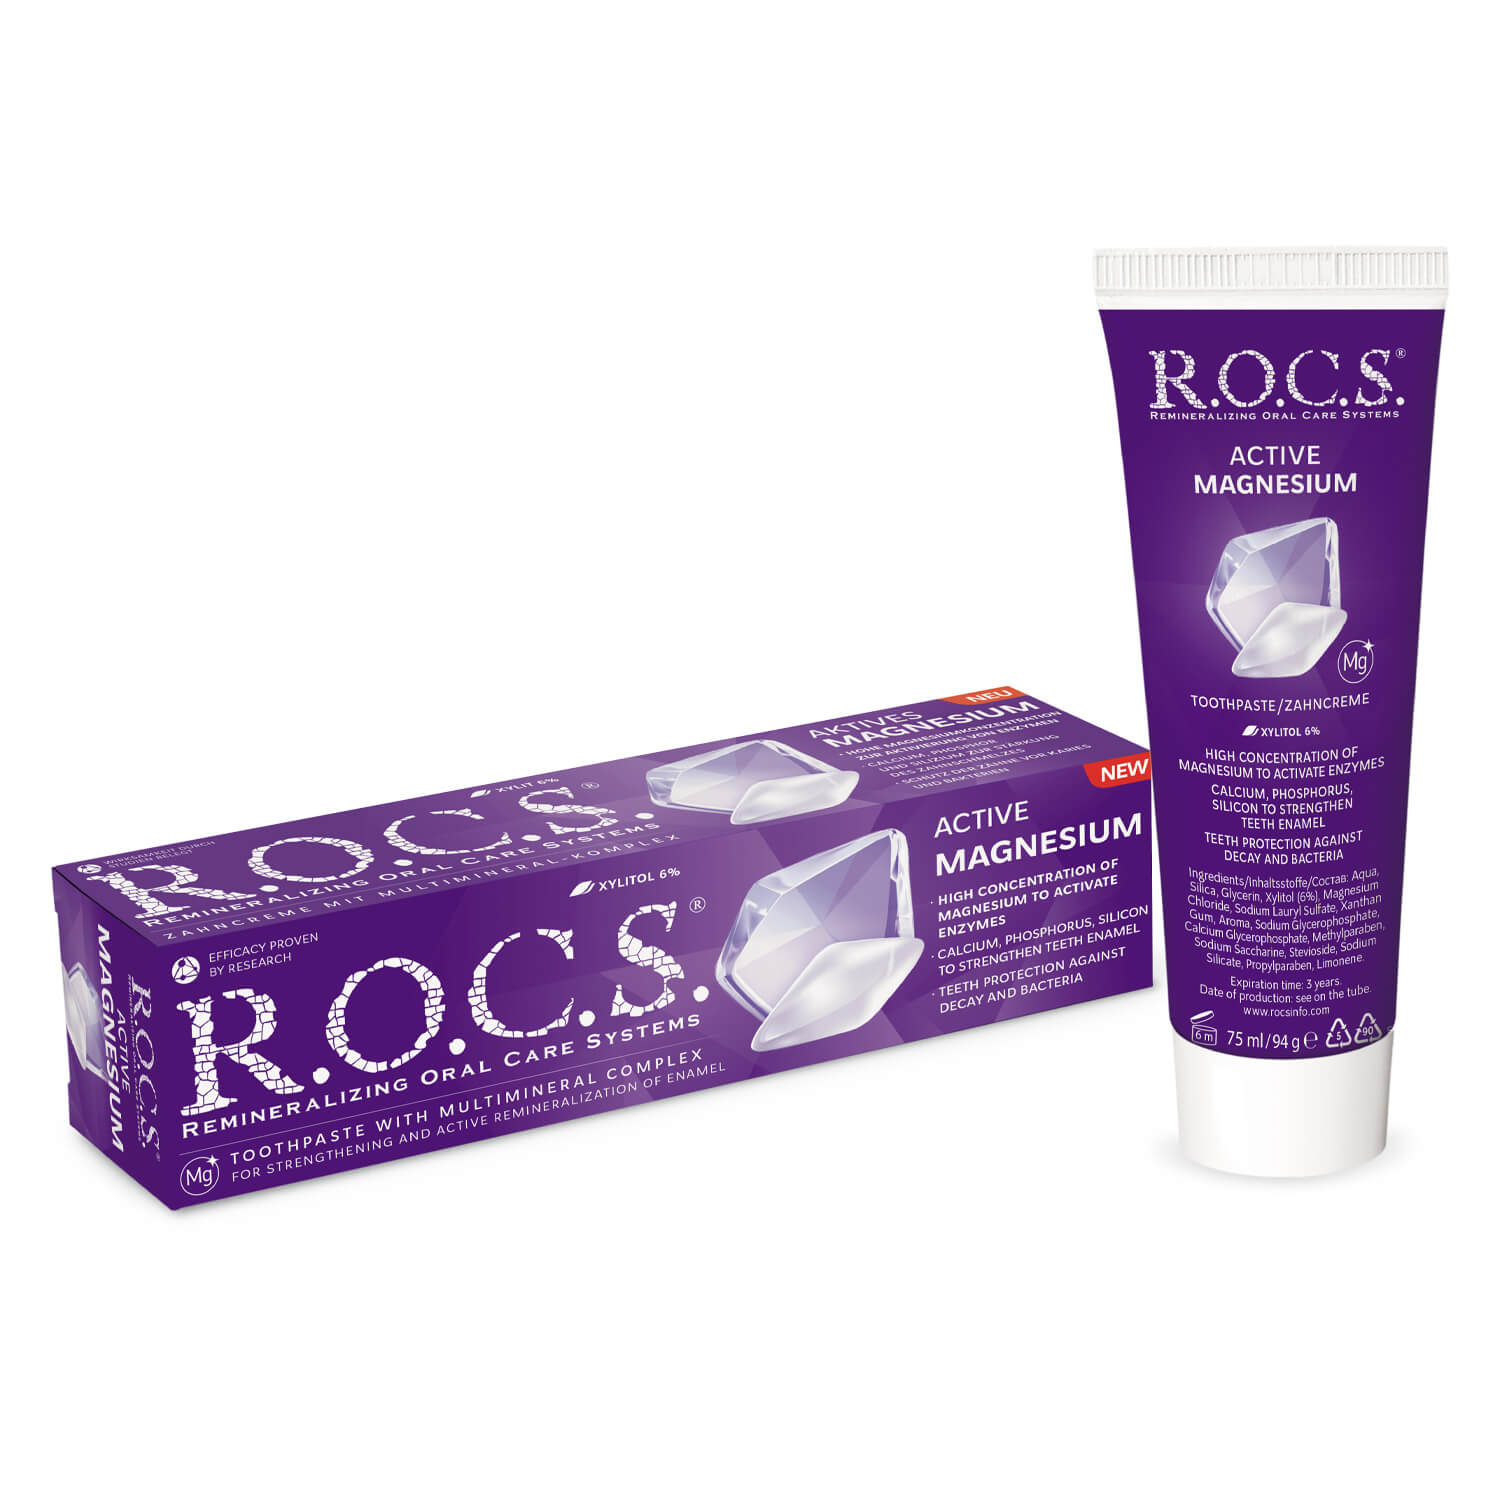 R.O.C.S. Active Magnesium Toothpaste